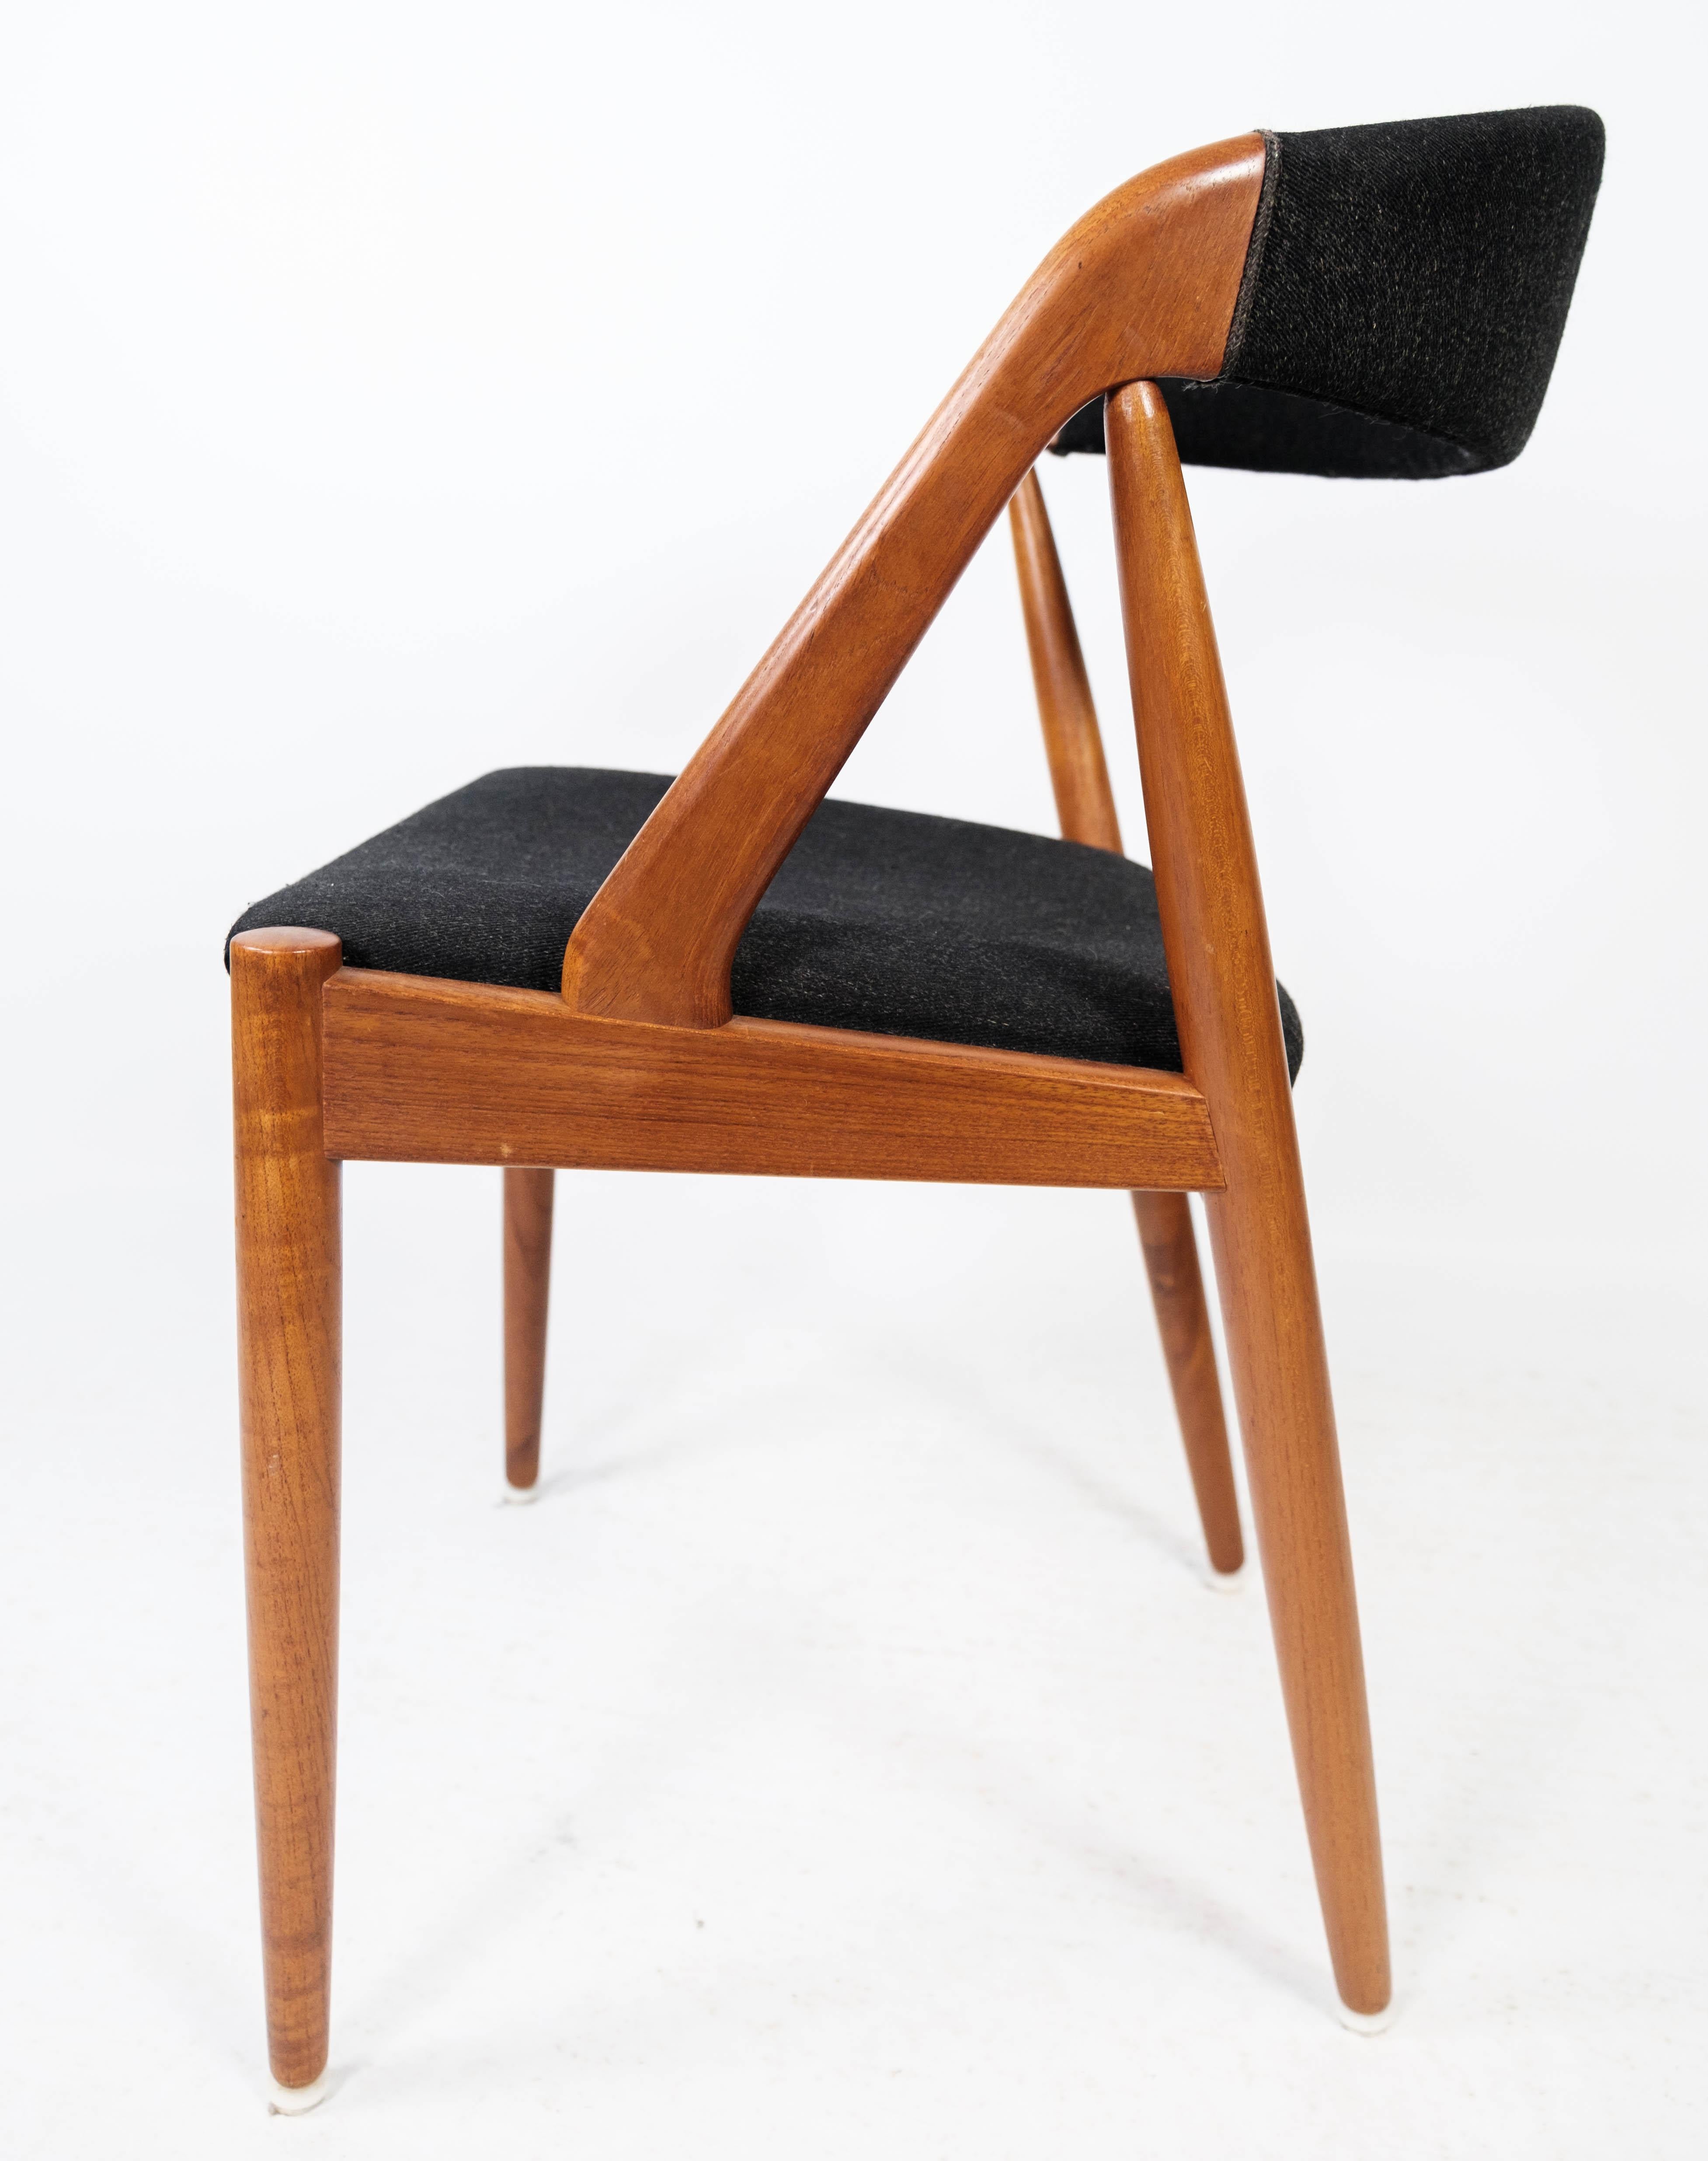 Danish Dining Room Chair, Model 31, Designed by Kai Kristiansen in 1956